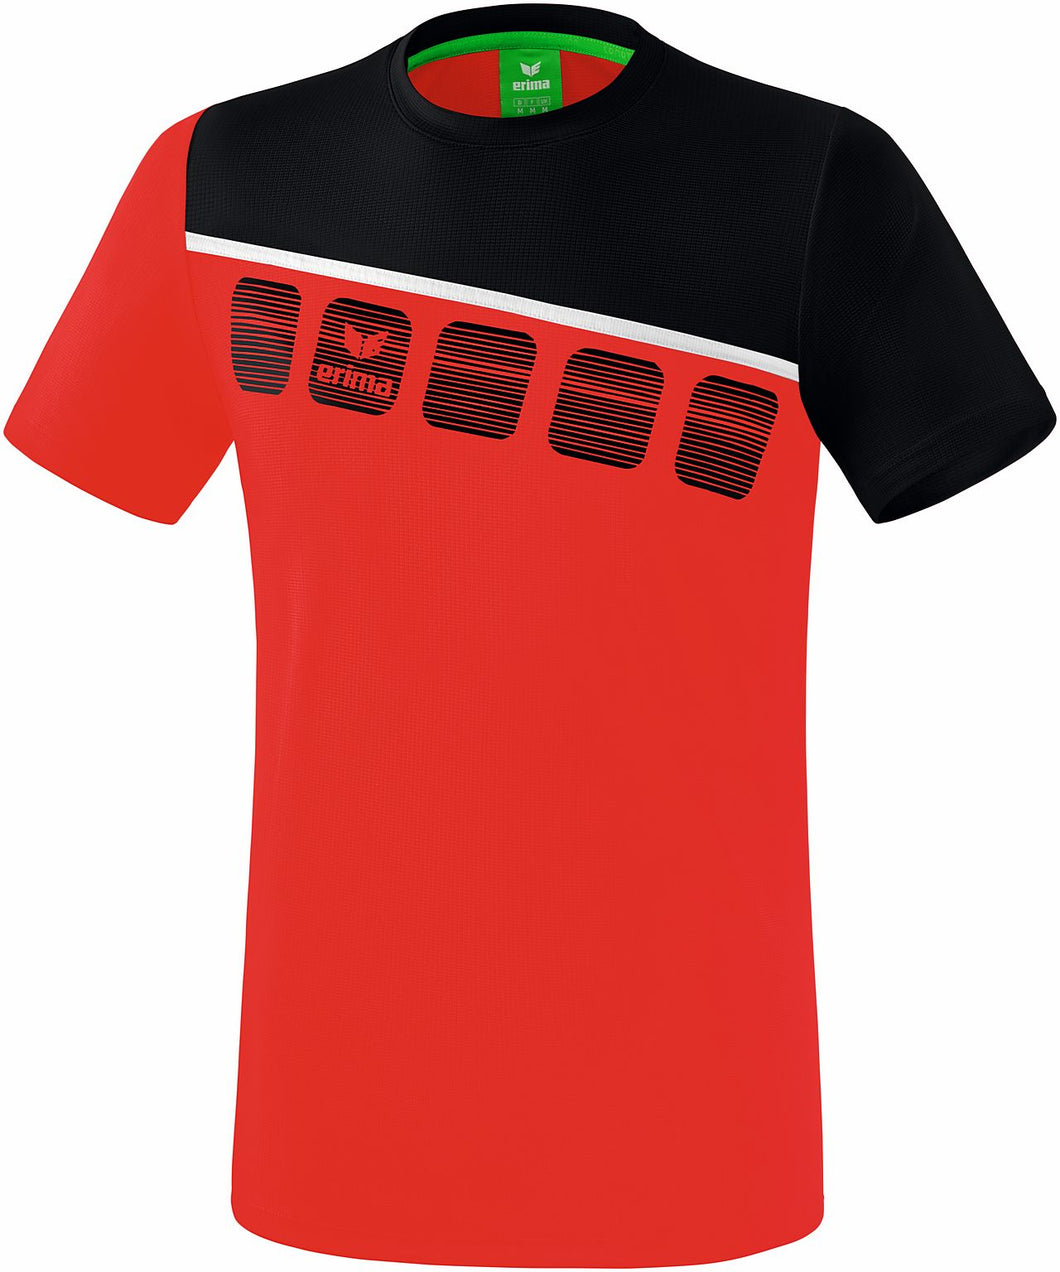 UG Teamline 5-C T-shirt